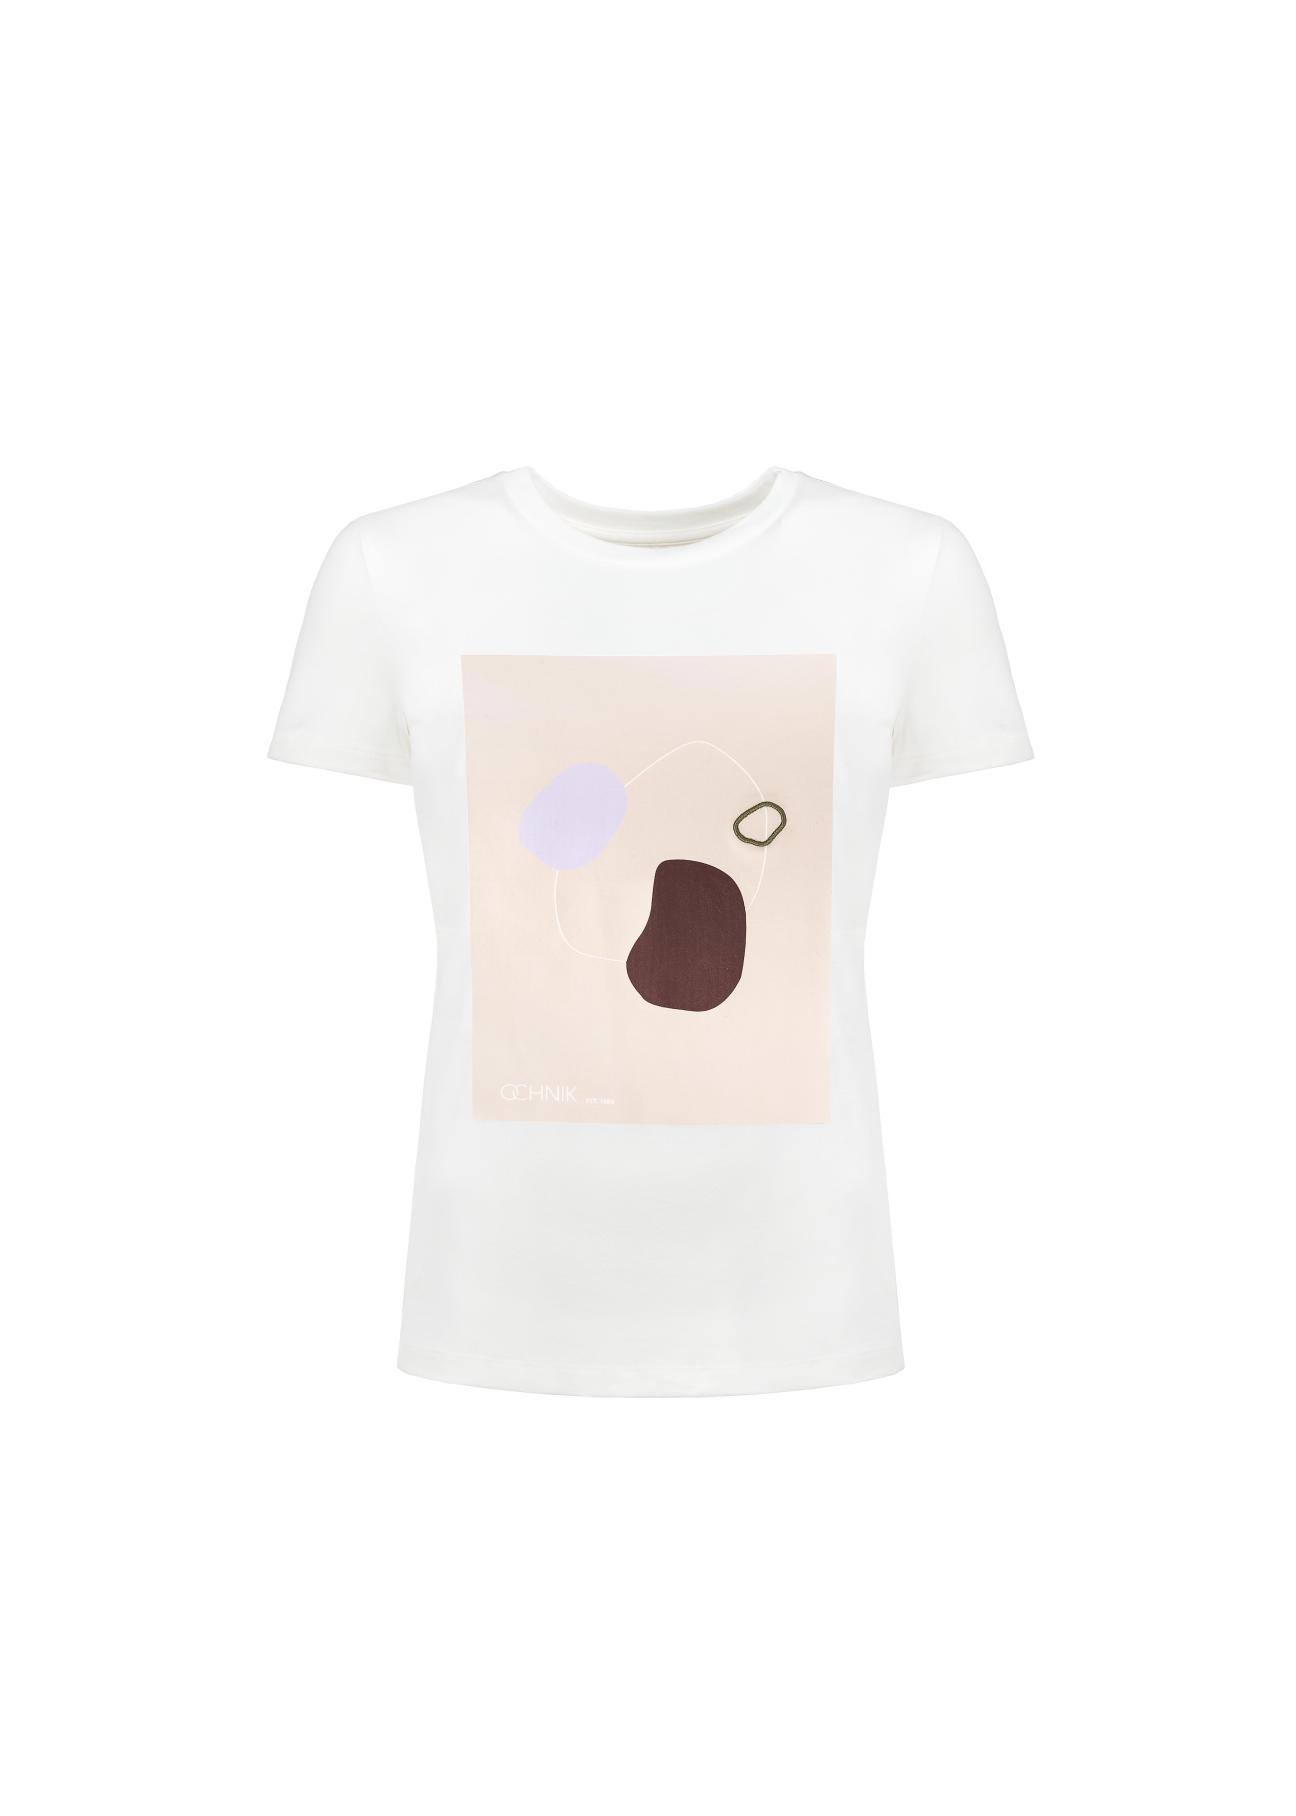 Bawełniany kremowy T-shirt damski TSHDT-0079-11(Z21)